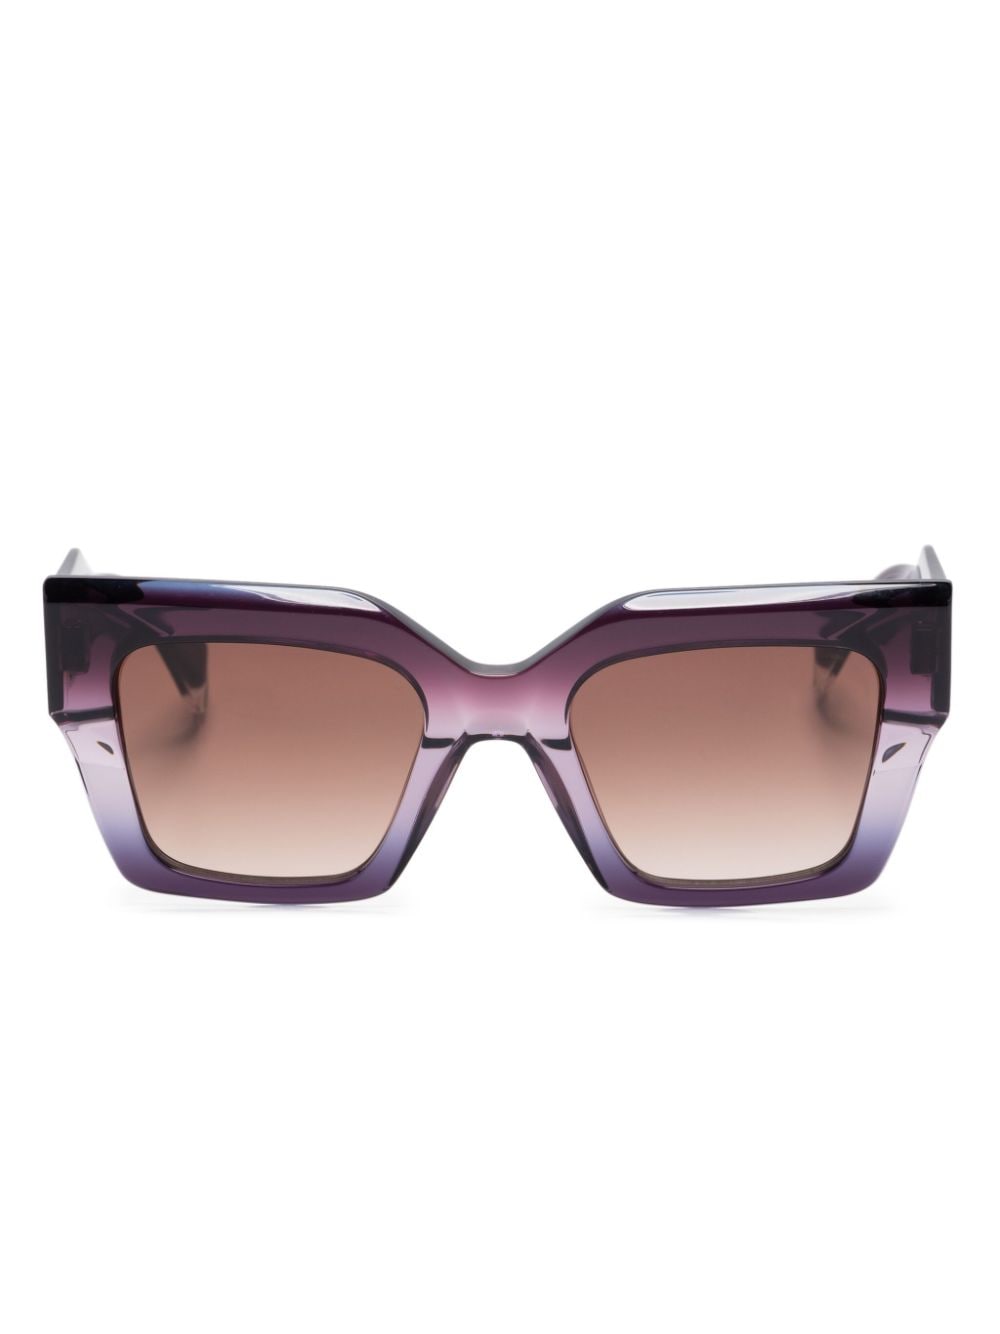 Kendall sqquare-frame sunglasses